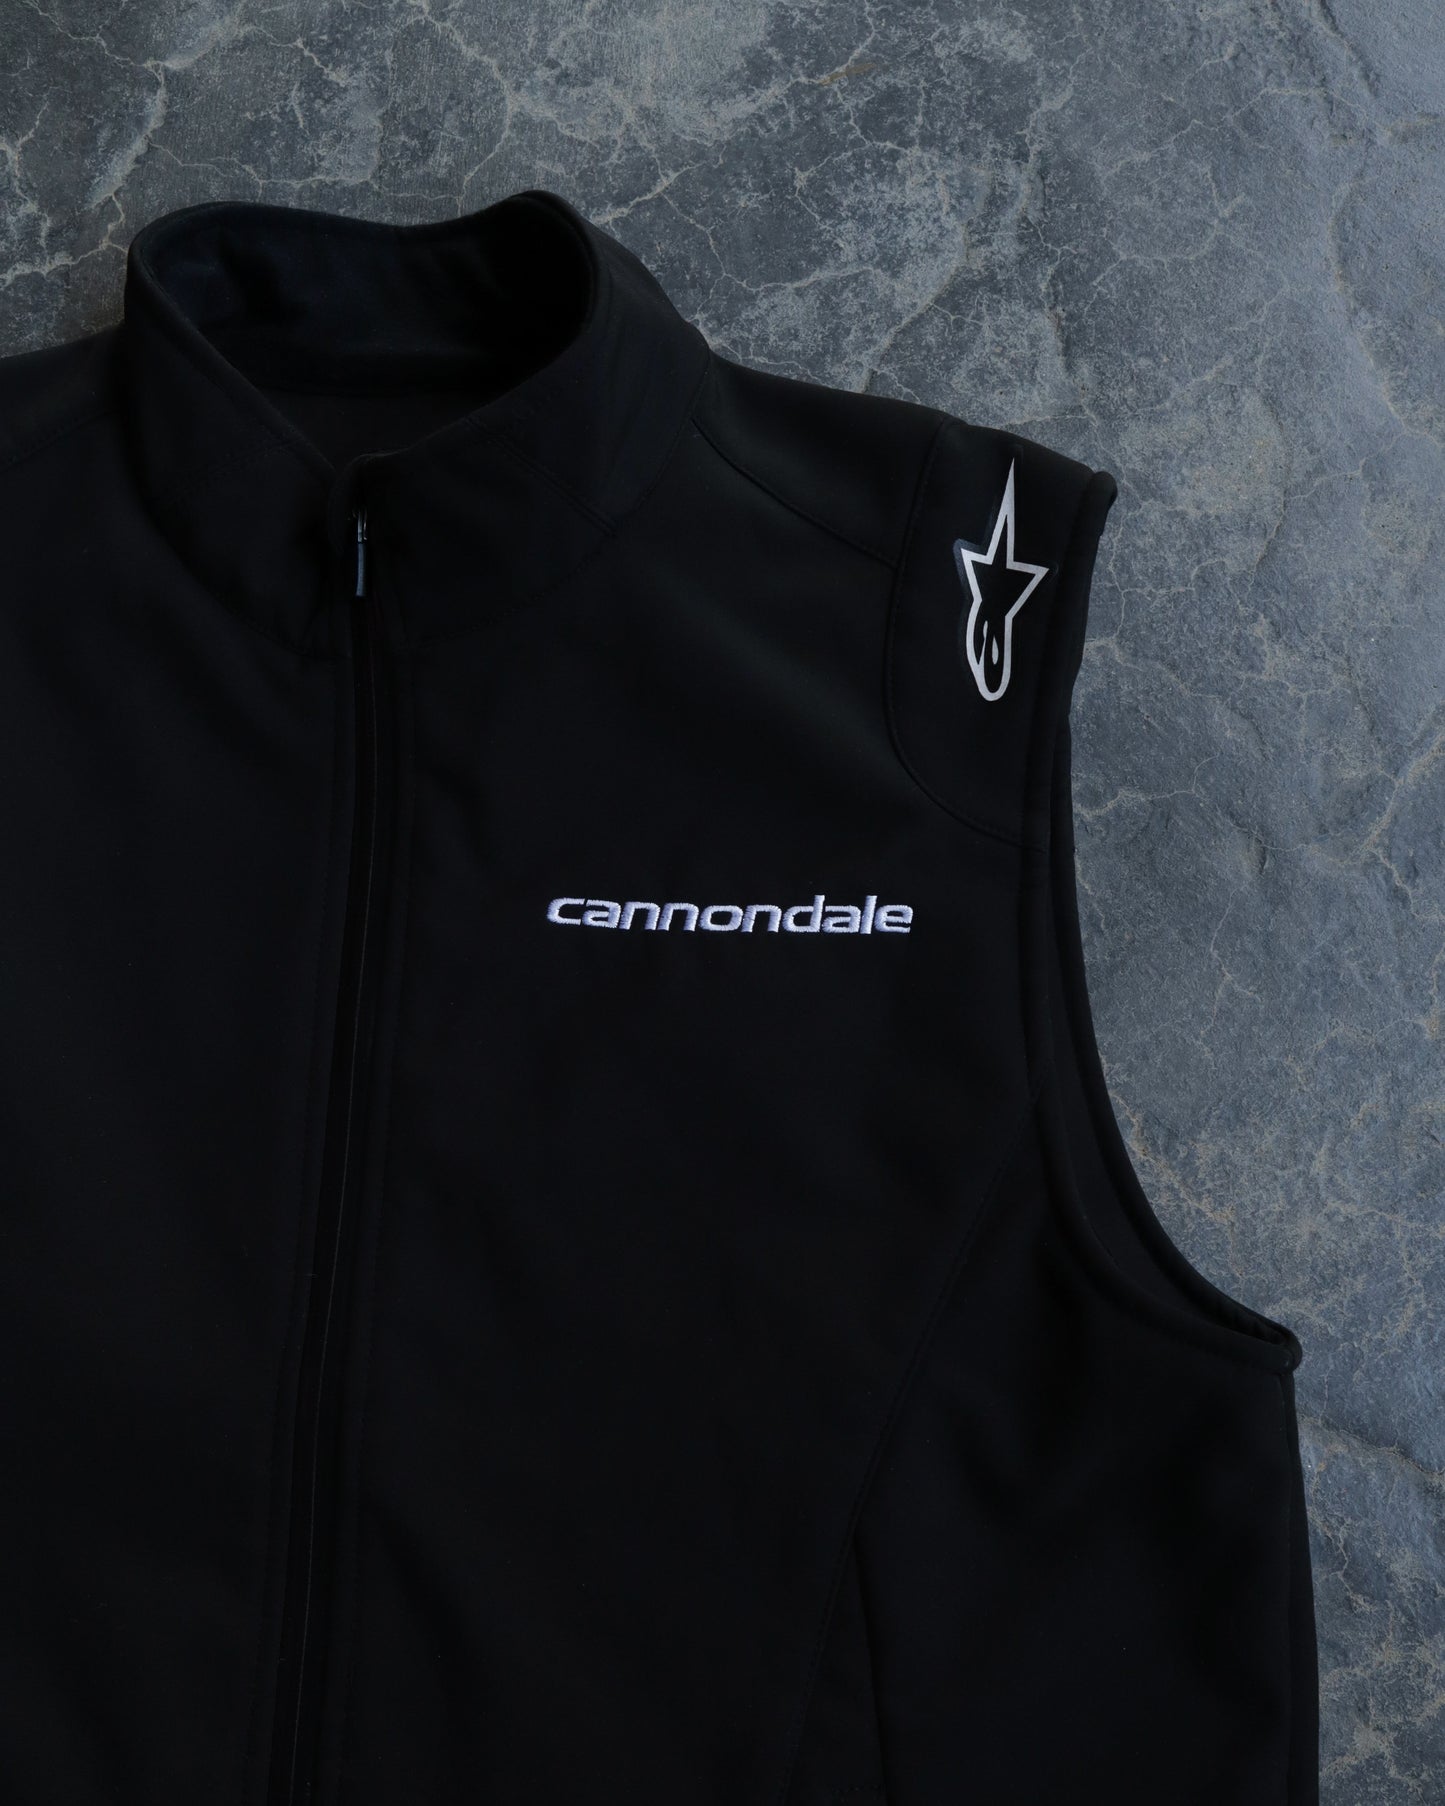 Modern Alpinetars Canondale Black Full Zip Vest - L